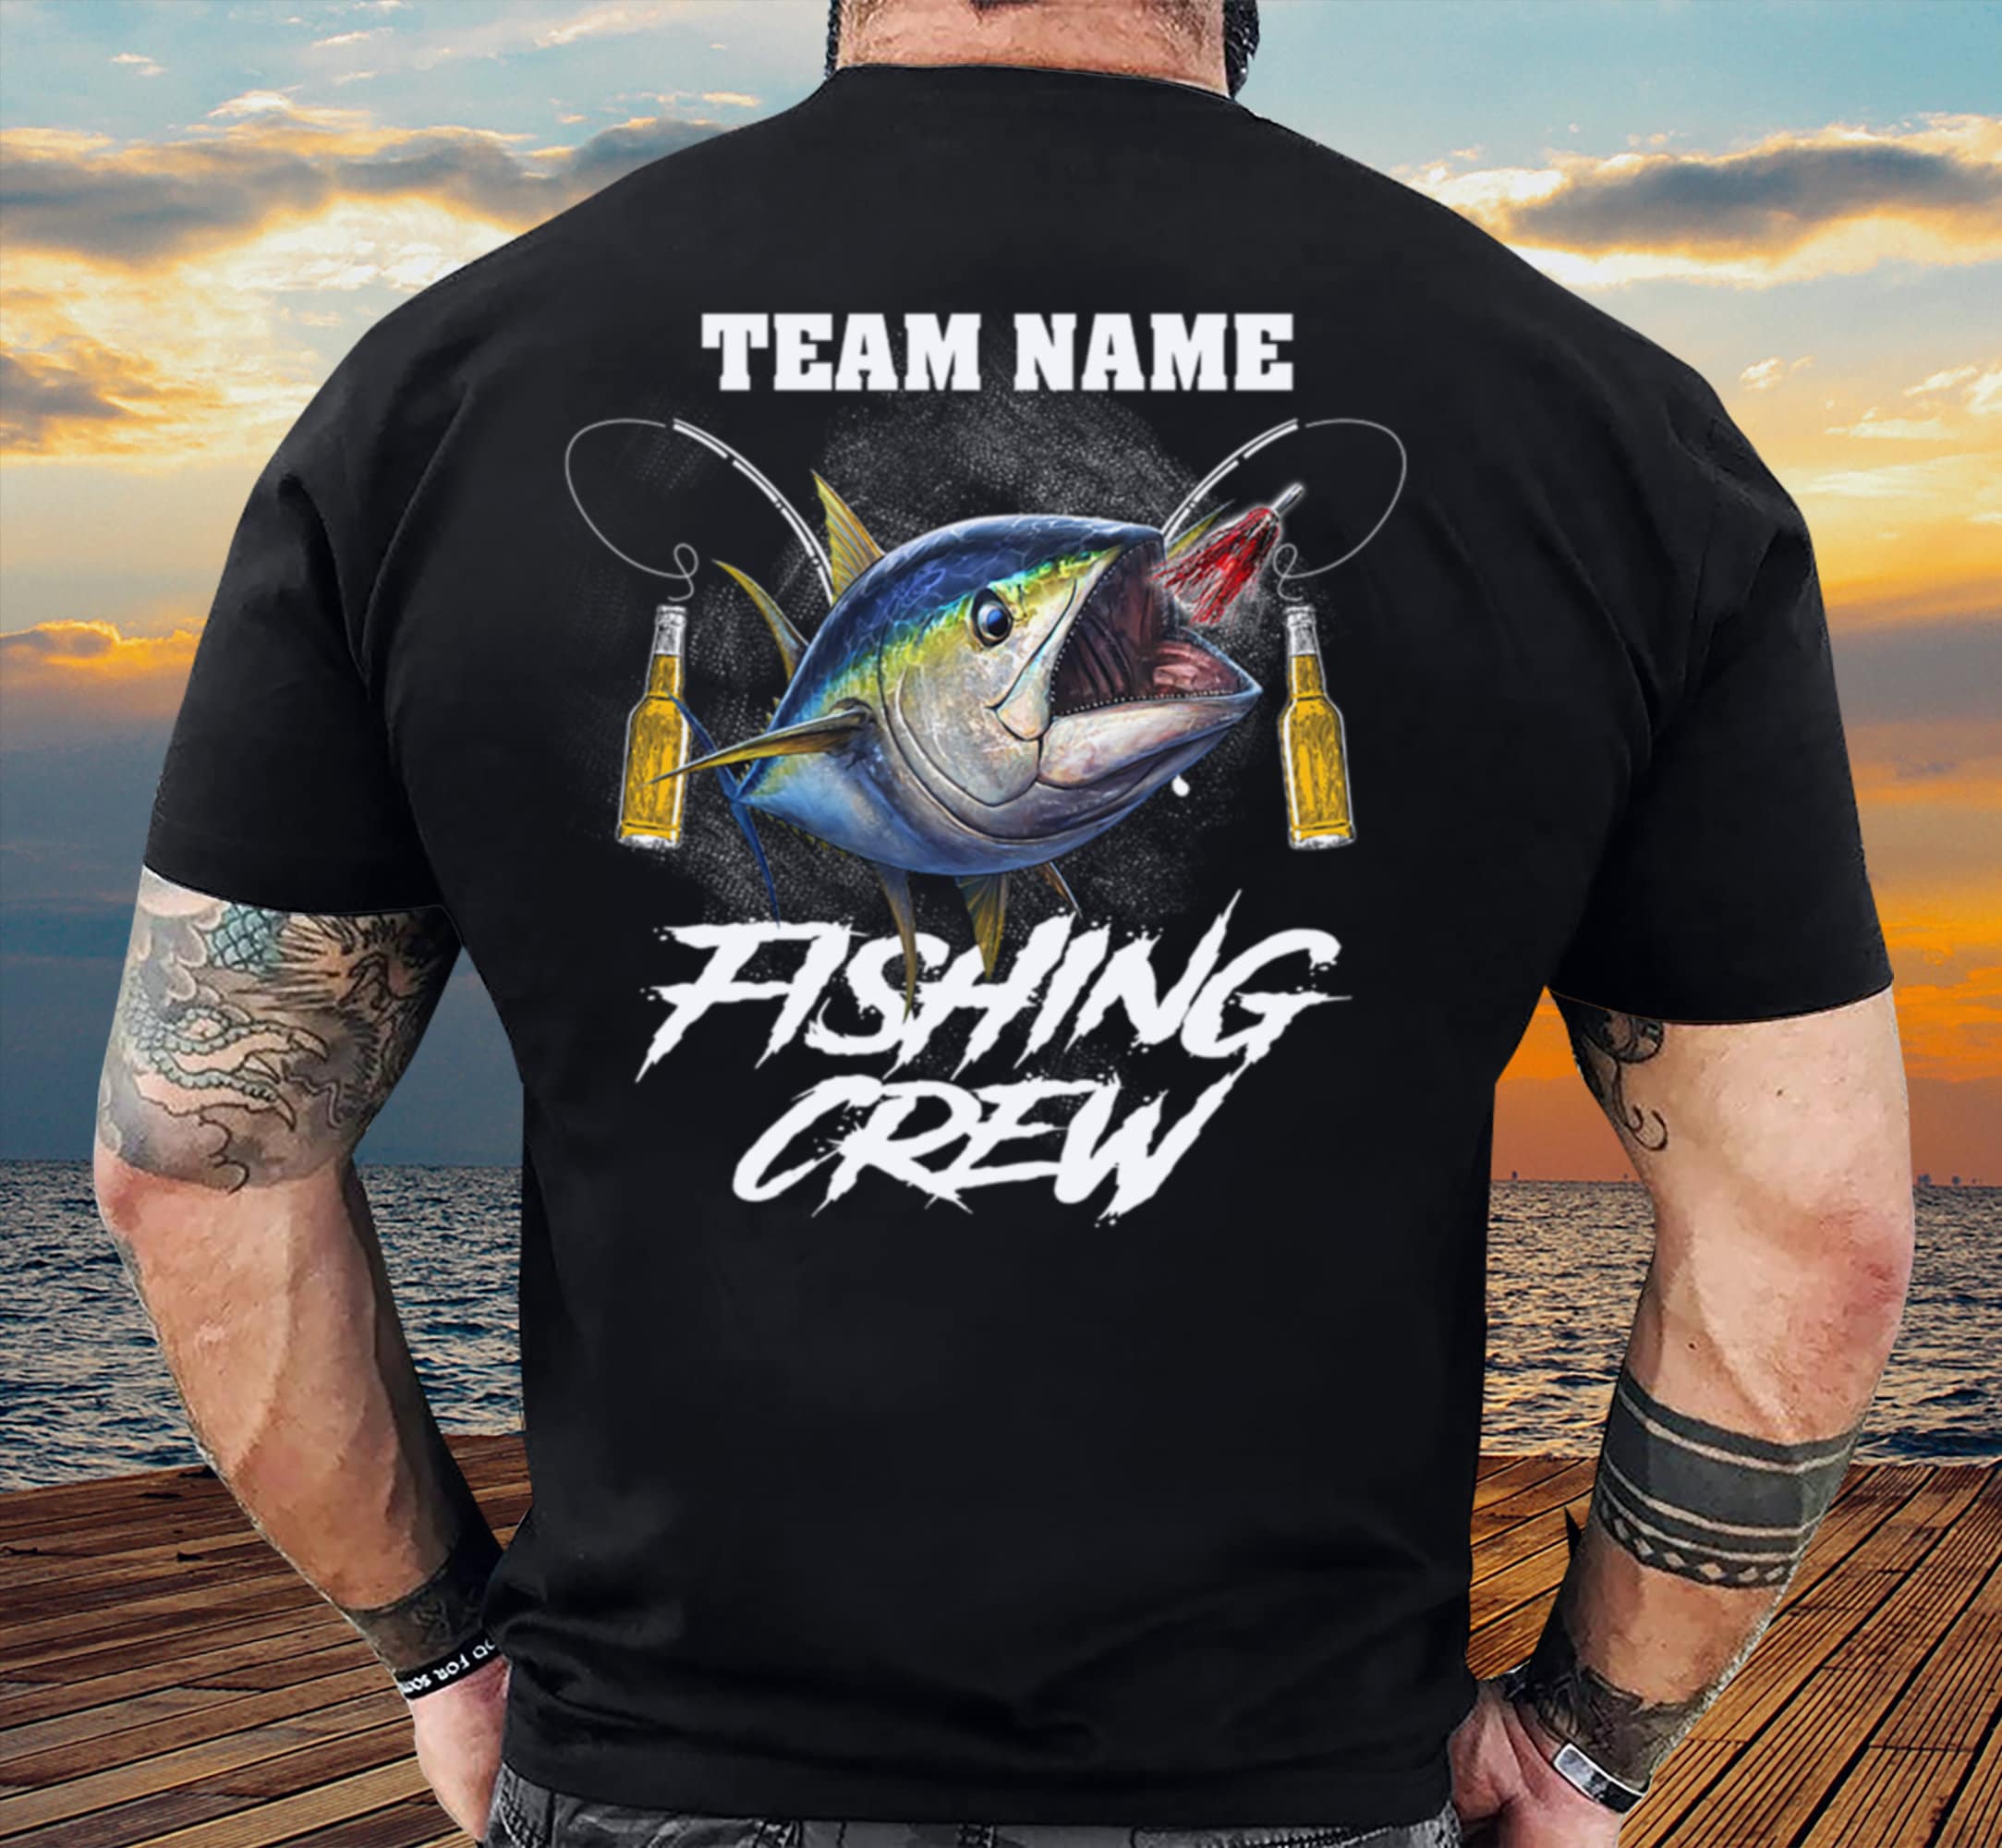 Buy Personalized Name Fishing, Team Name Tuna Fishing Crew T-shirt